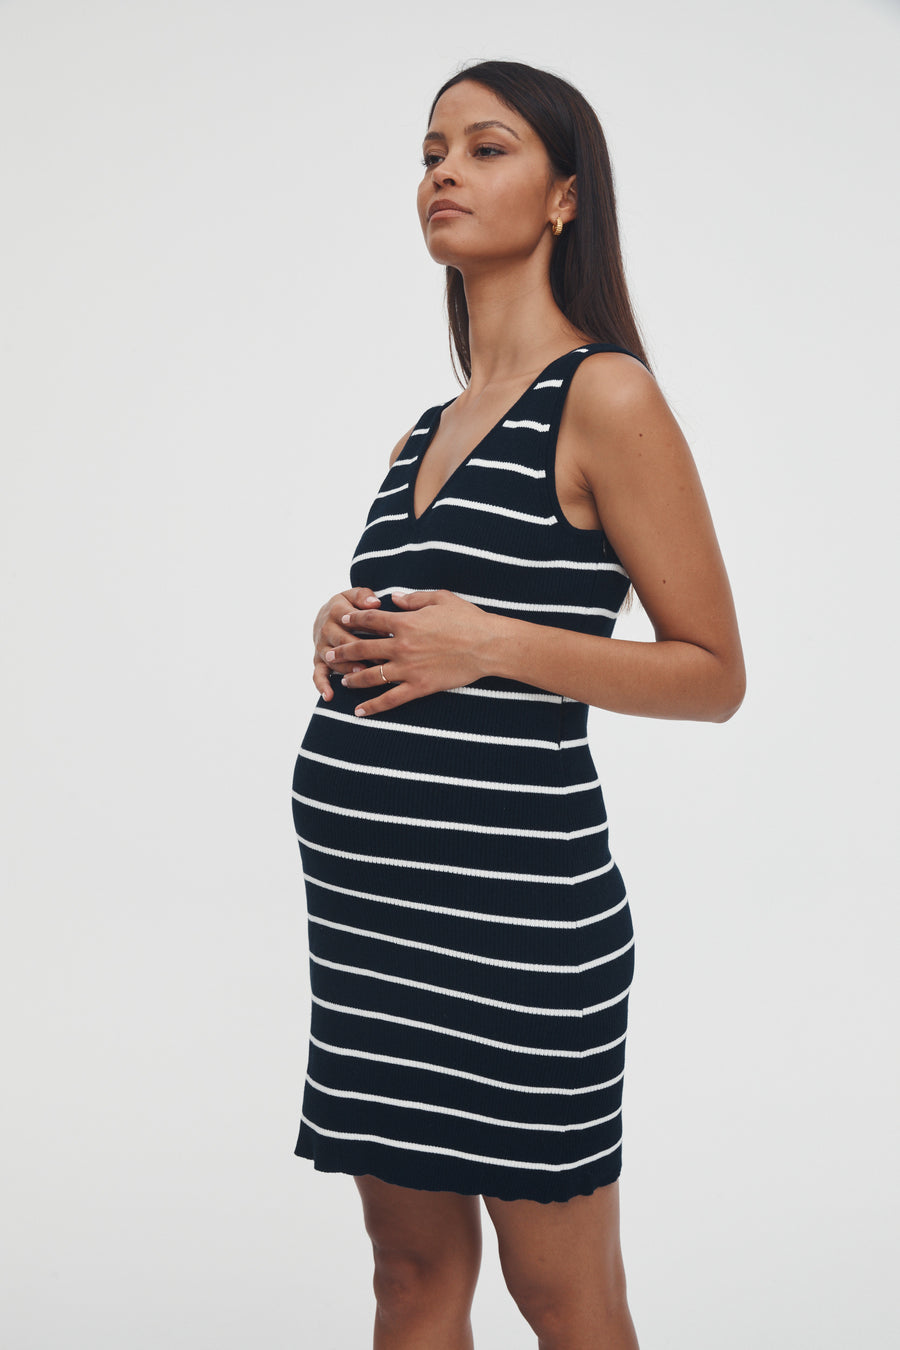 Summer Maternity Dress (Navy Stripe) 6